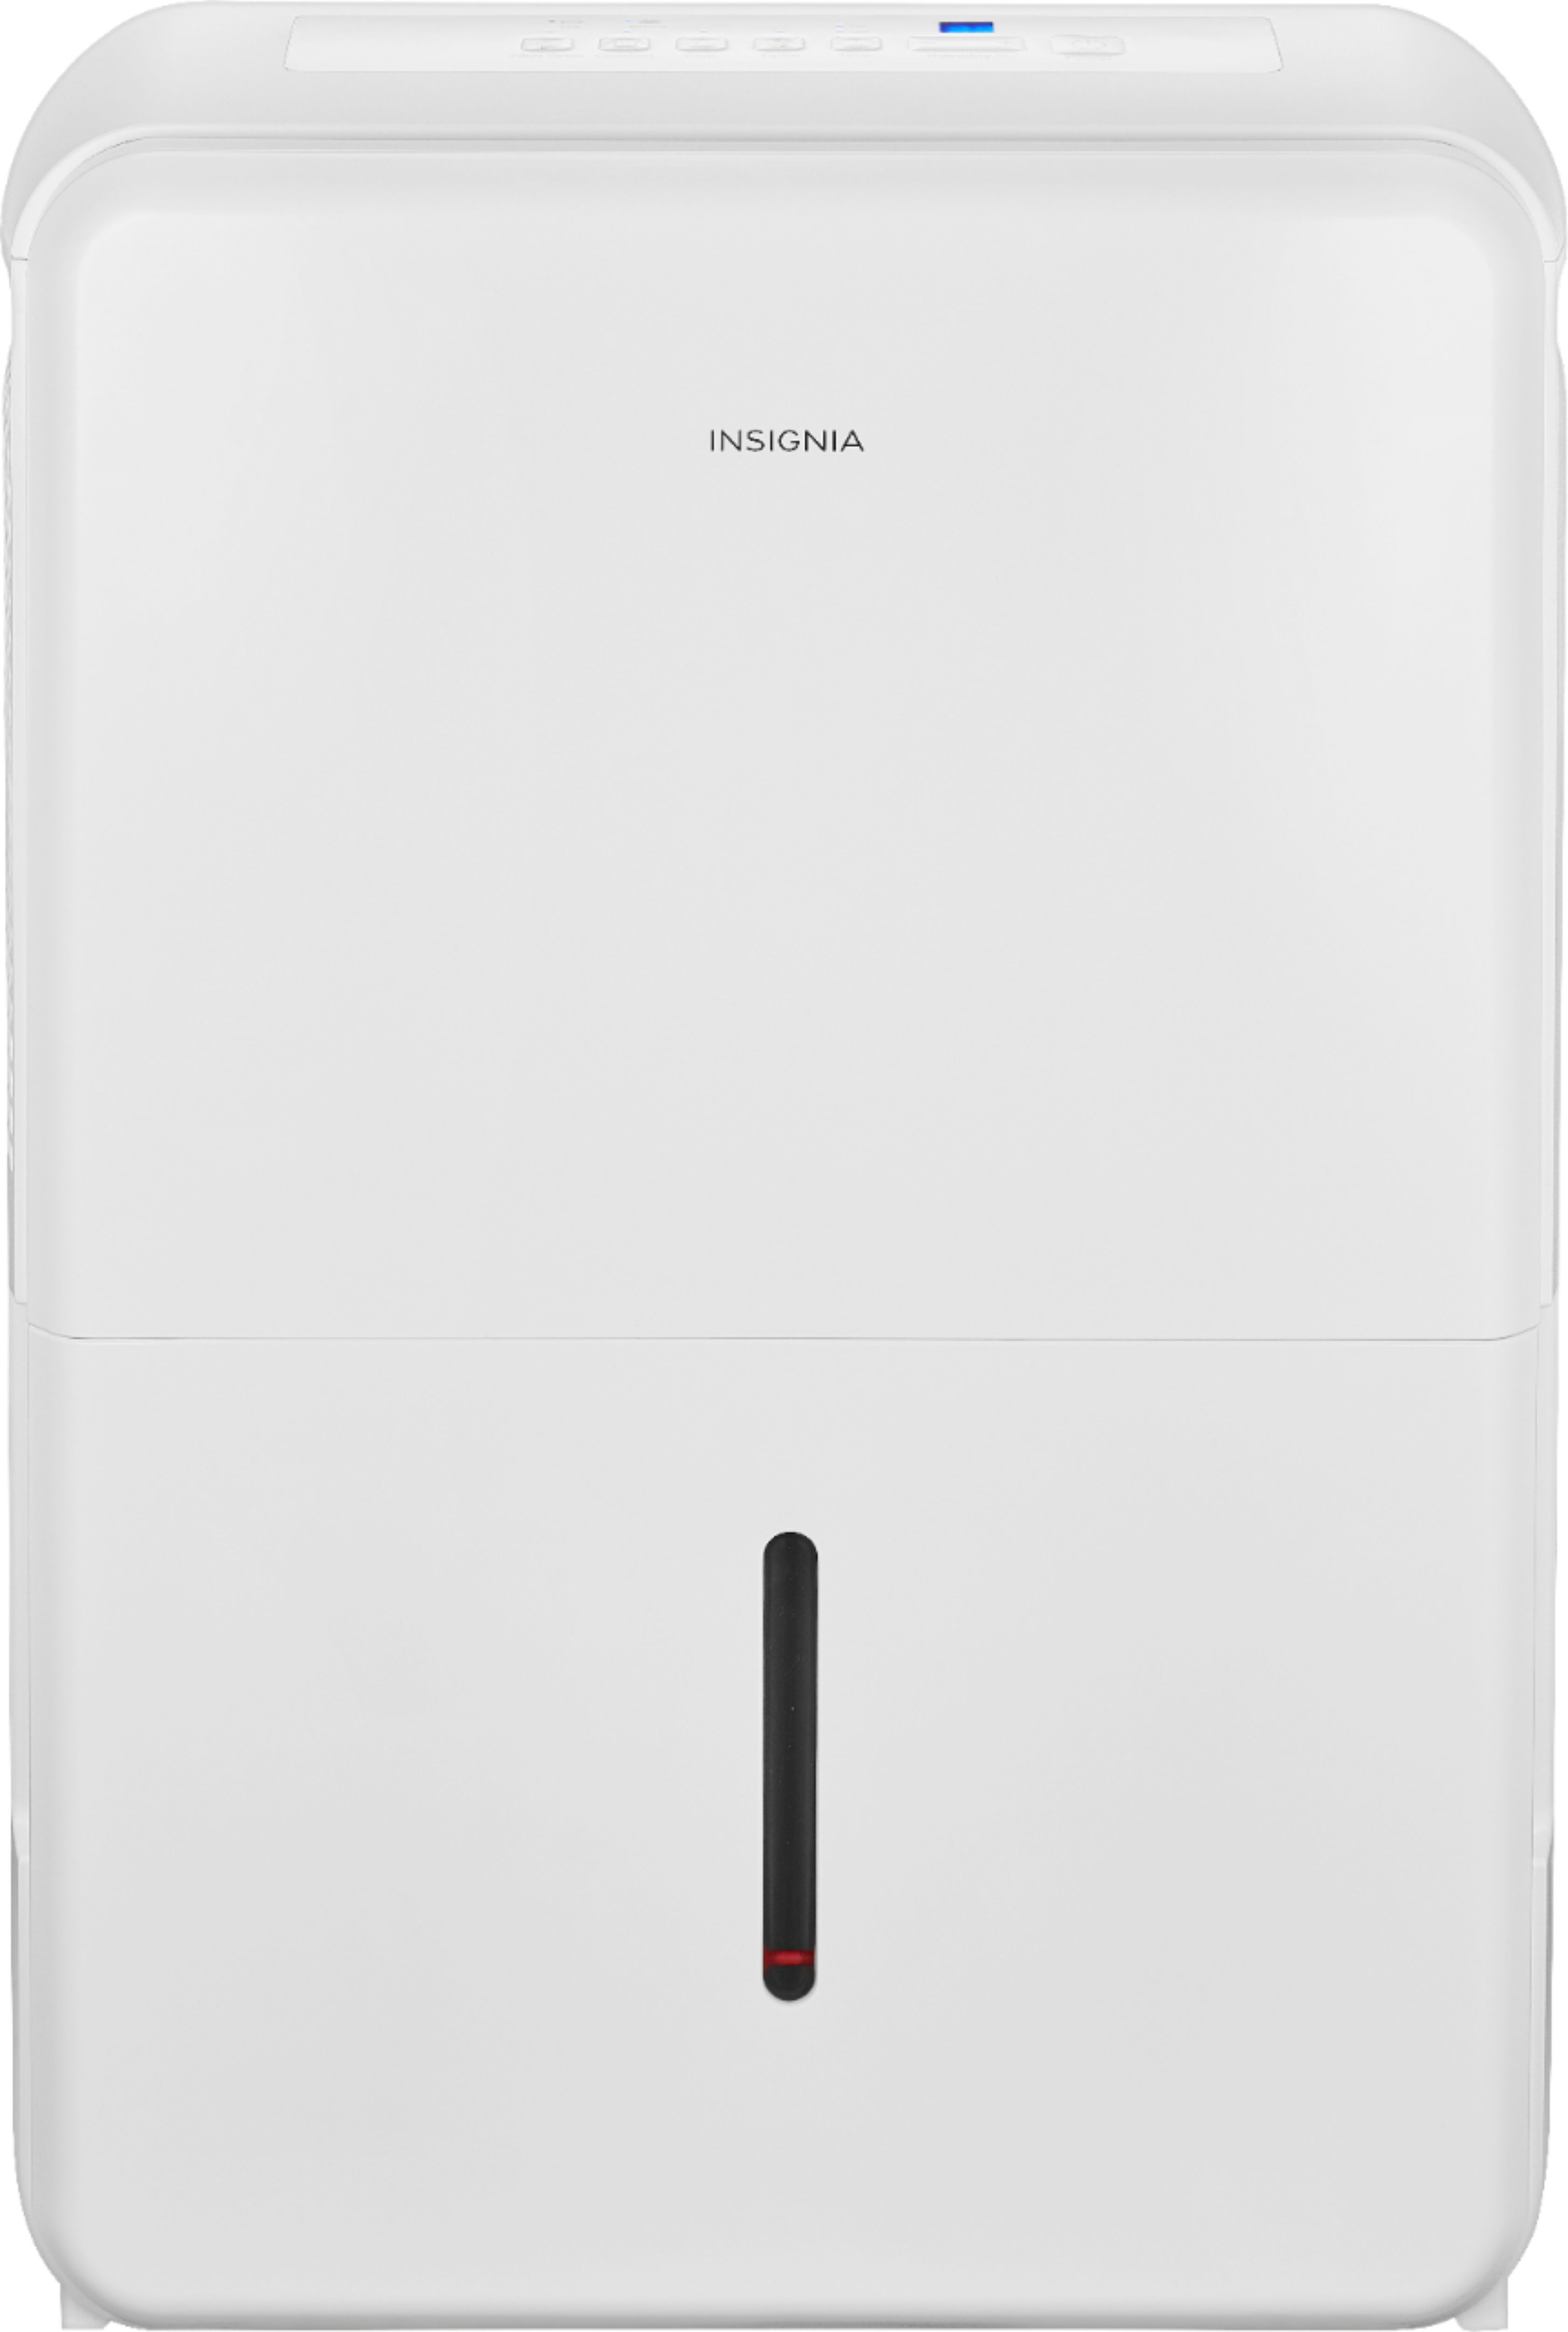 Insignia™ 50-Pint Dehumidifier (White)  @BestBuy $150